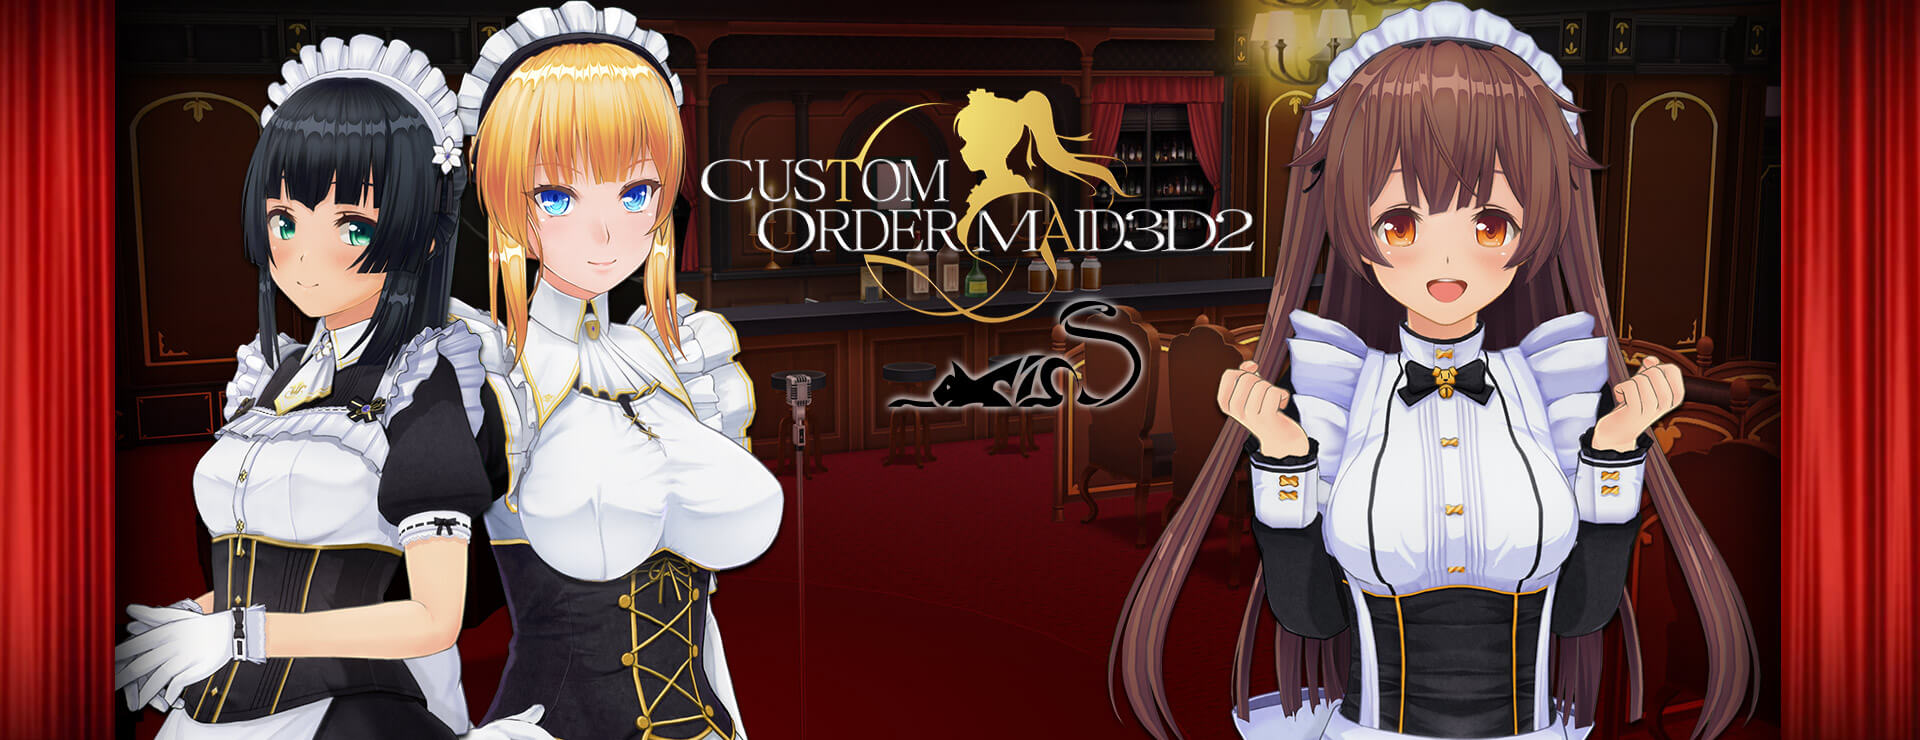 Custom Order Maid 3D2 Game - Symulacja Gra